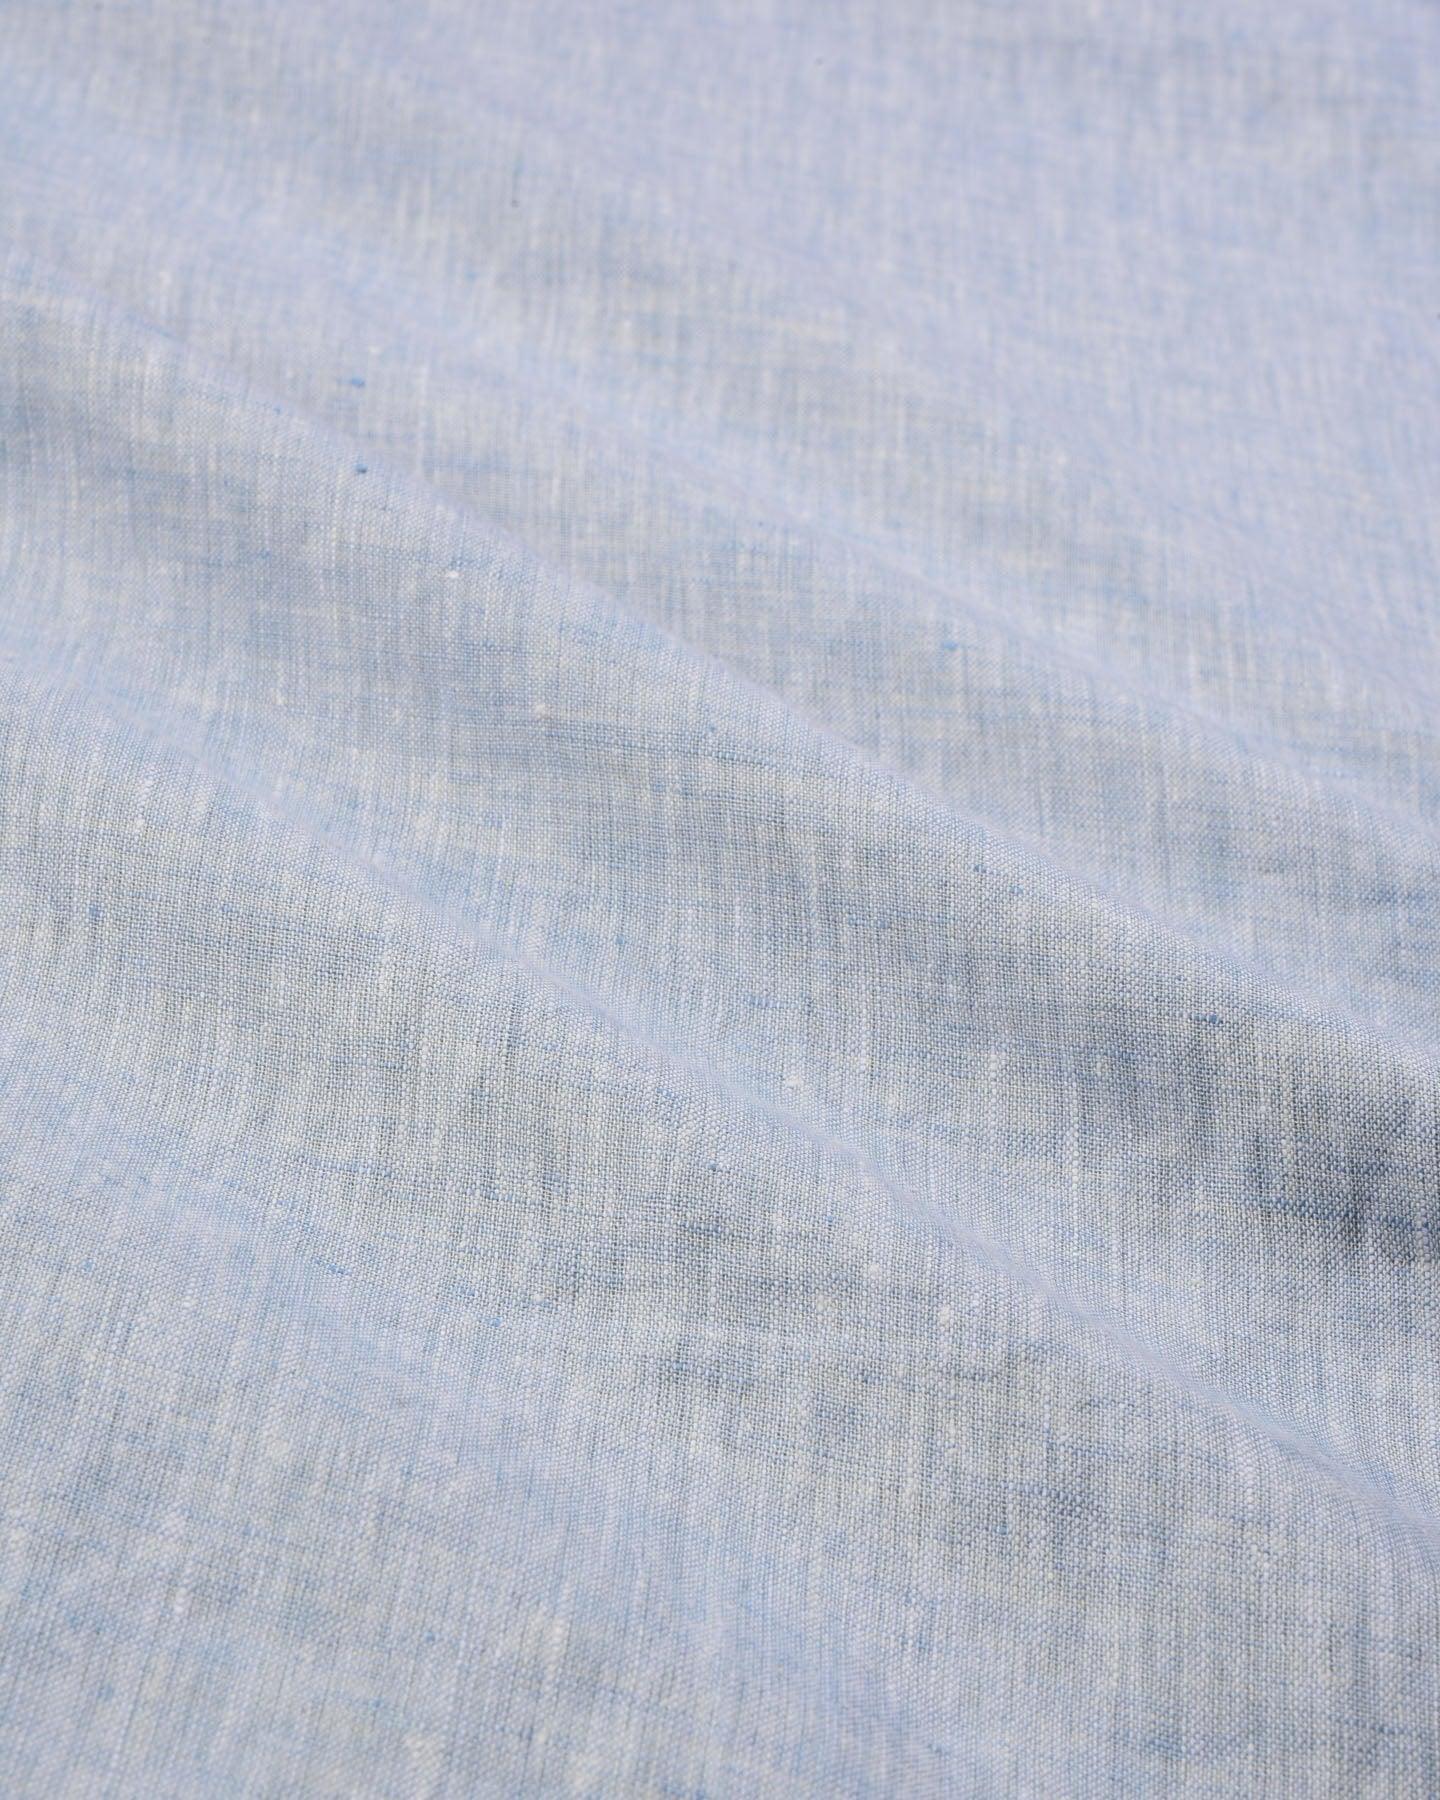 Sky Blue Textured Plain Woven Cotton Linen Fabric - By HolyWeaves, Benares